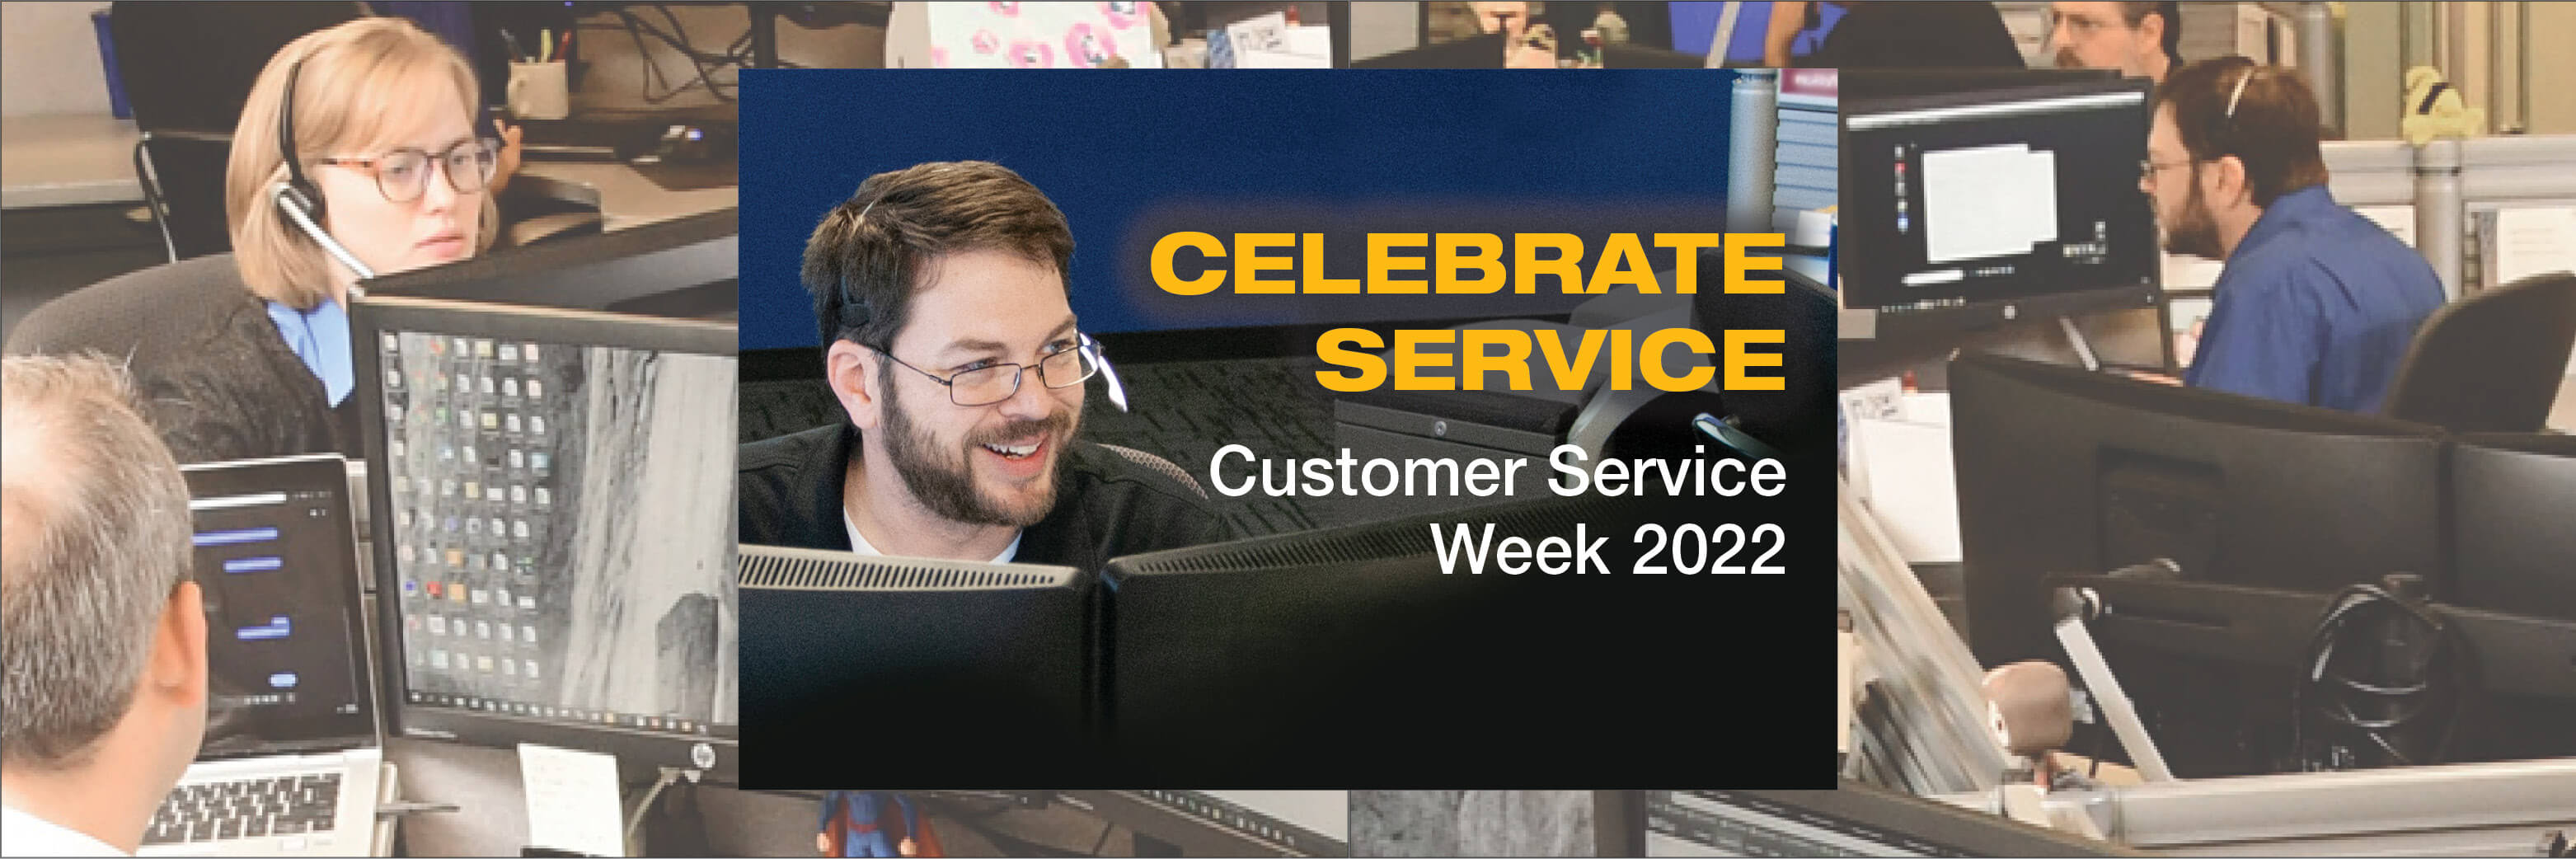 Celebrate Service - Customer Service Week 2022